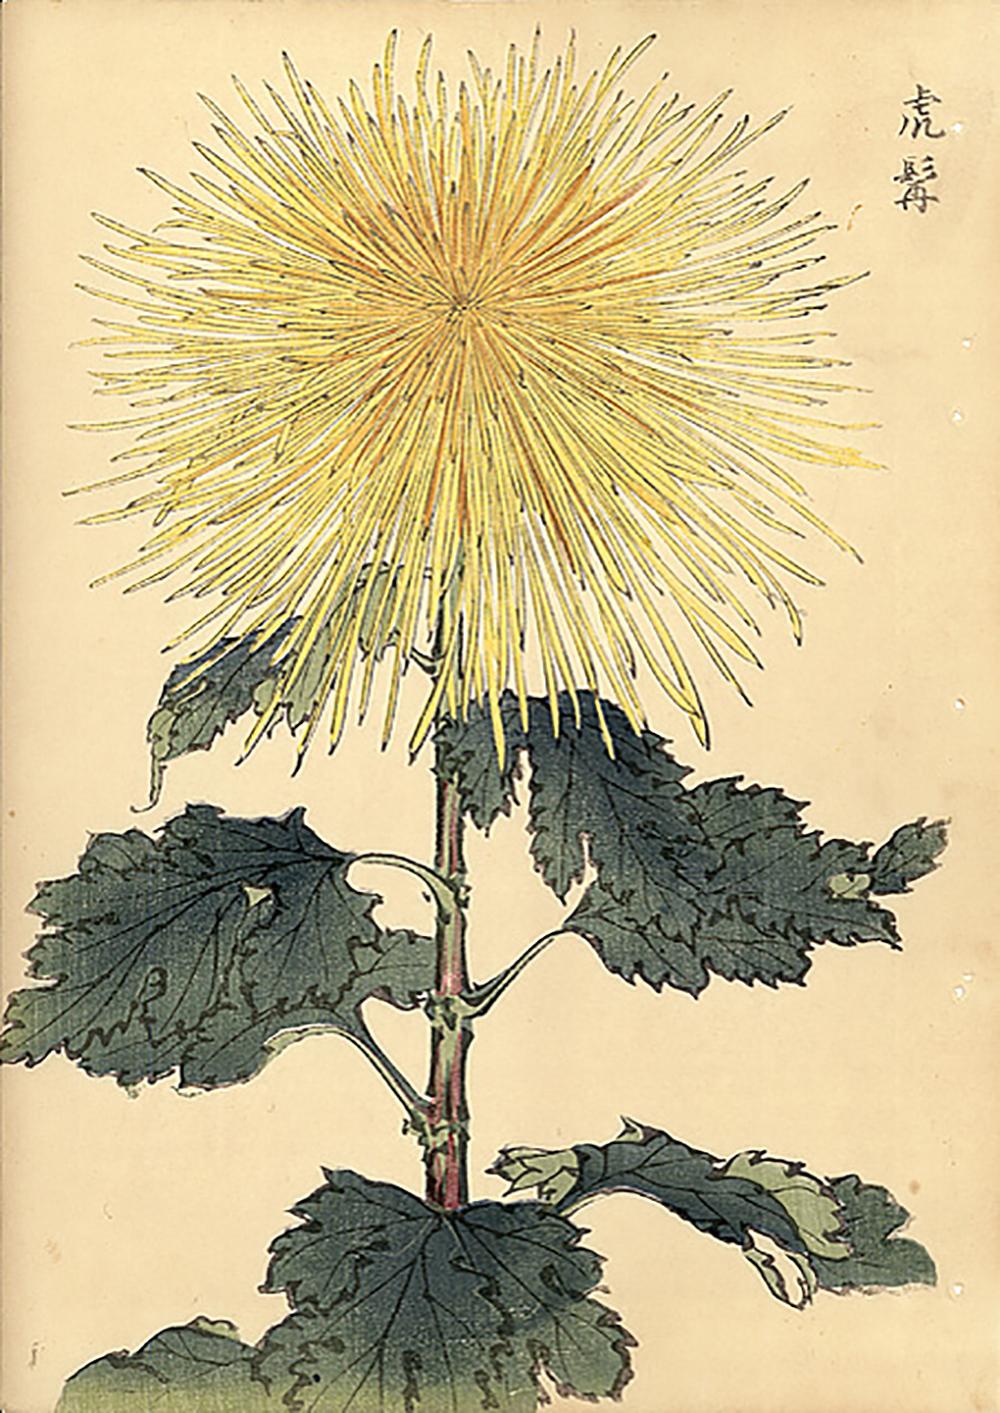 Unknown Still-Life Print - Chrysanthemum Woodblock Print - 19